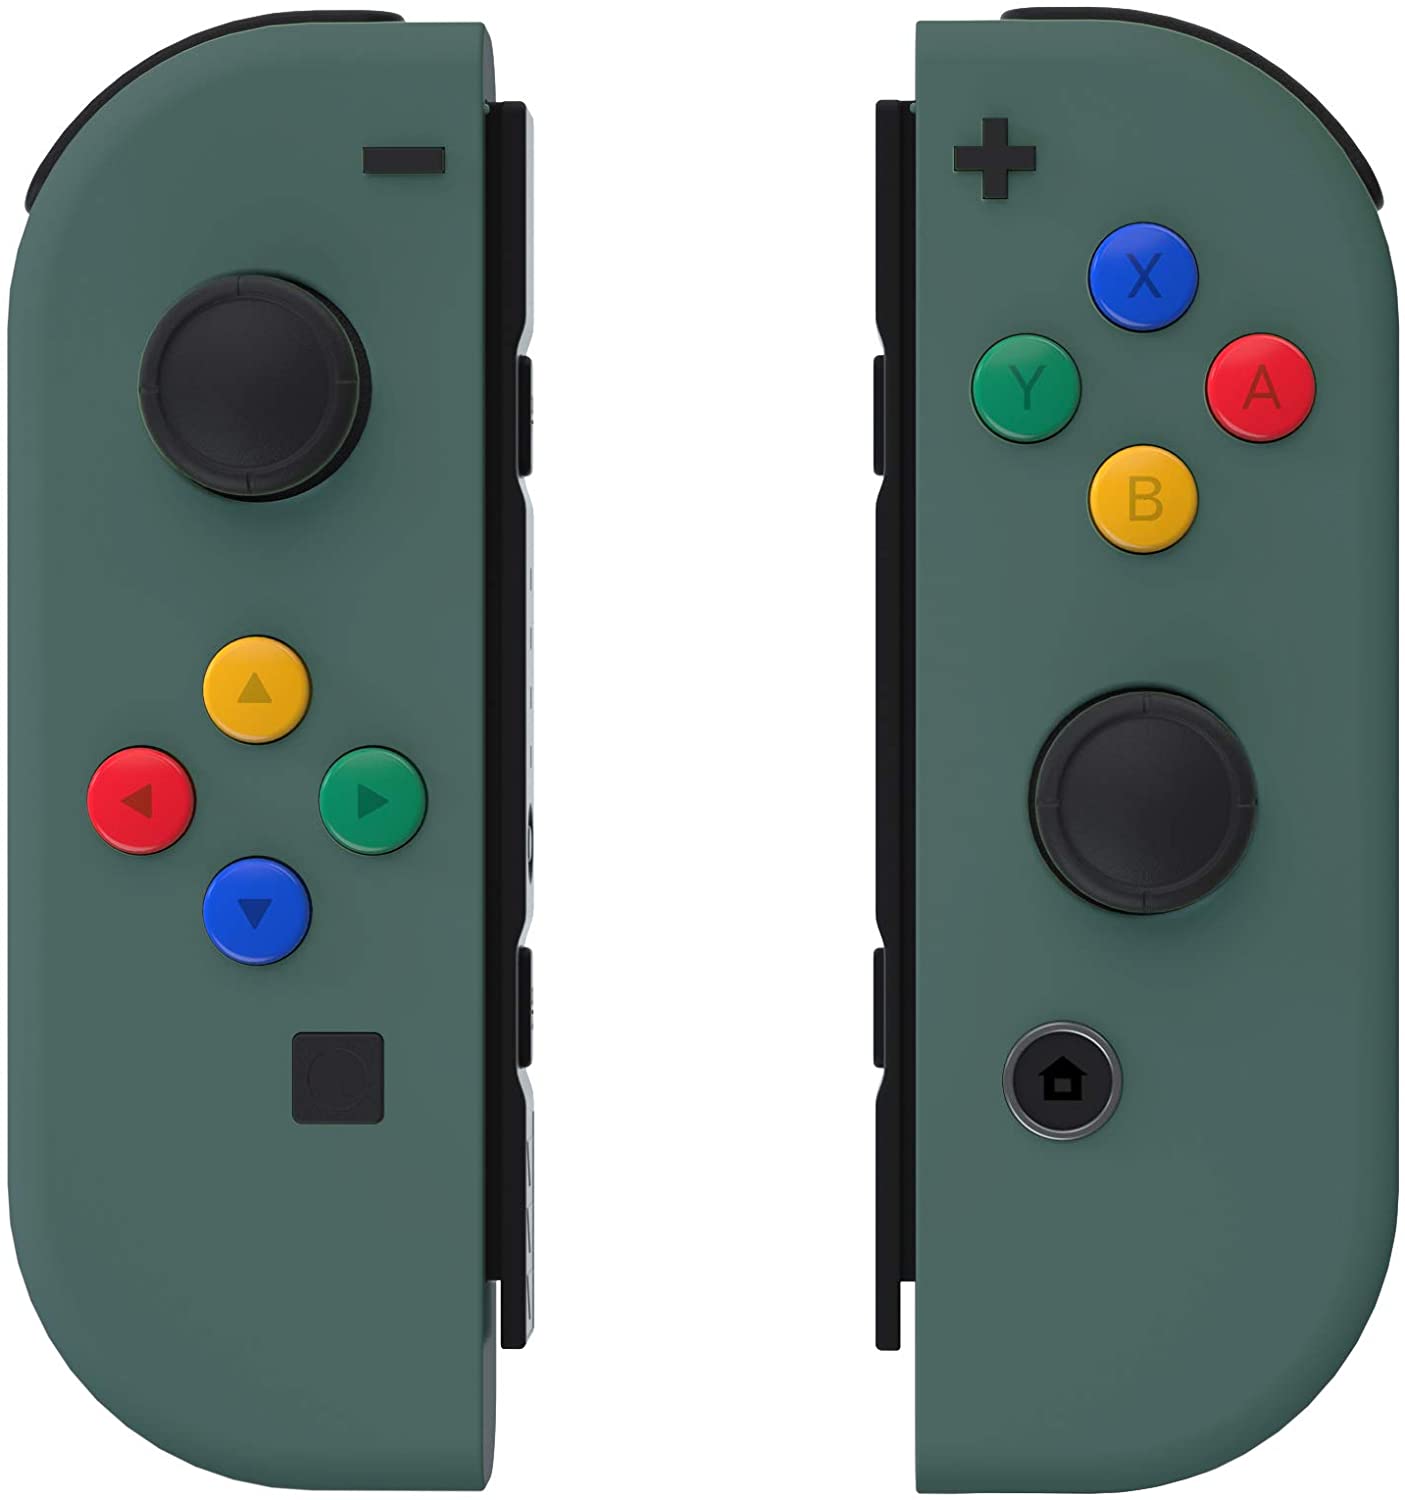 Pine Green Soft Touch - Customizable Options - OEM Nintendo Joy-Cons